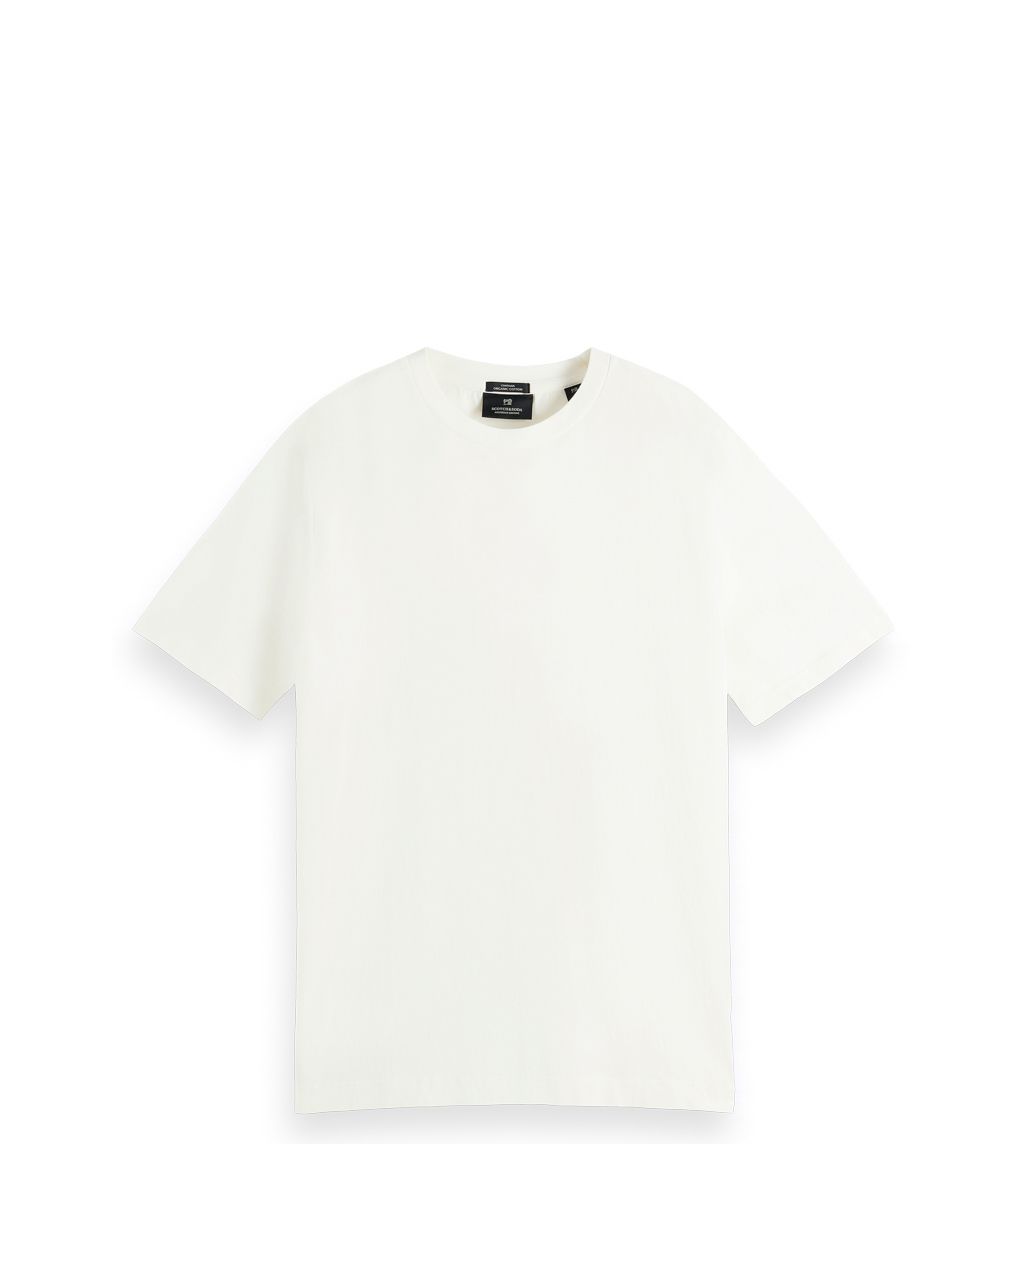 Scotch & Soda T-shirt KM Off white 065989-001-L